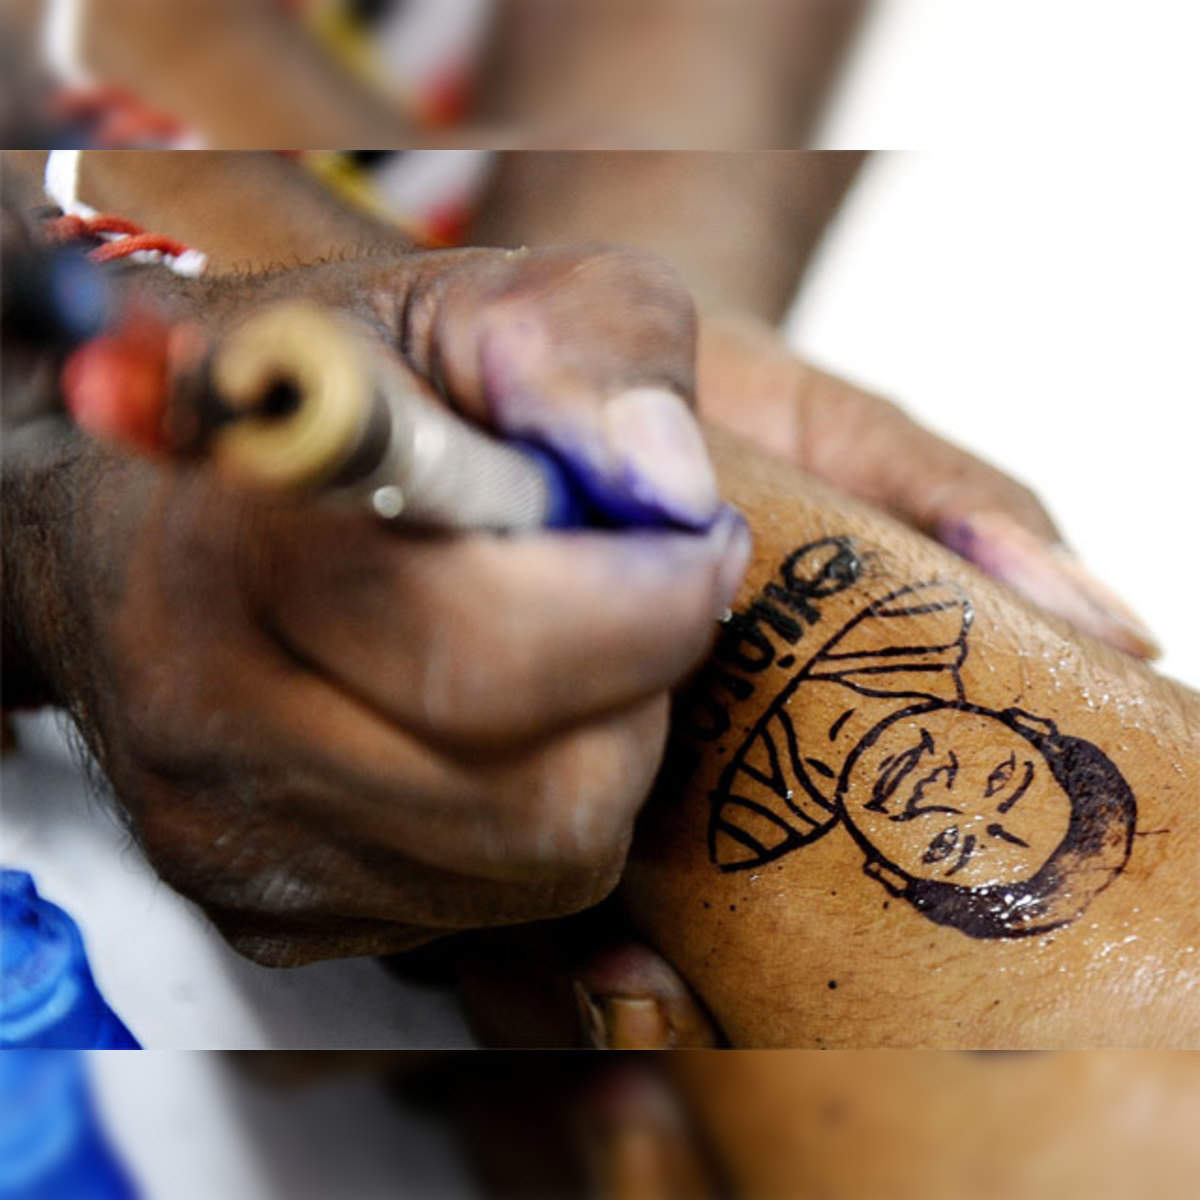 Tattoology Studio - Anchor Tattoo... #tattoo #anchortattoo #forearmtattoo  #handtattoo #tattooedmen #inkedmen #inked #tattoos #anchorman #anchor  #broken #chain #roman #date #datetattoo #popeye #sailor #sailorman #ship # merchantnavy #navy #instagram ...